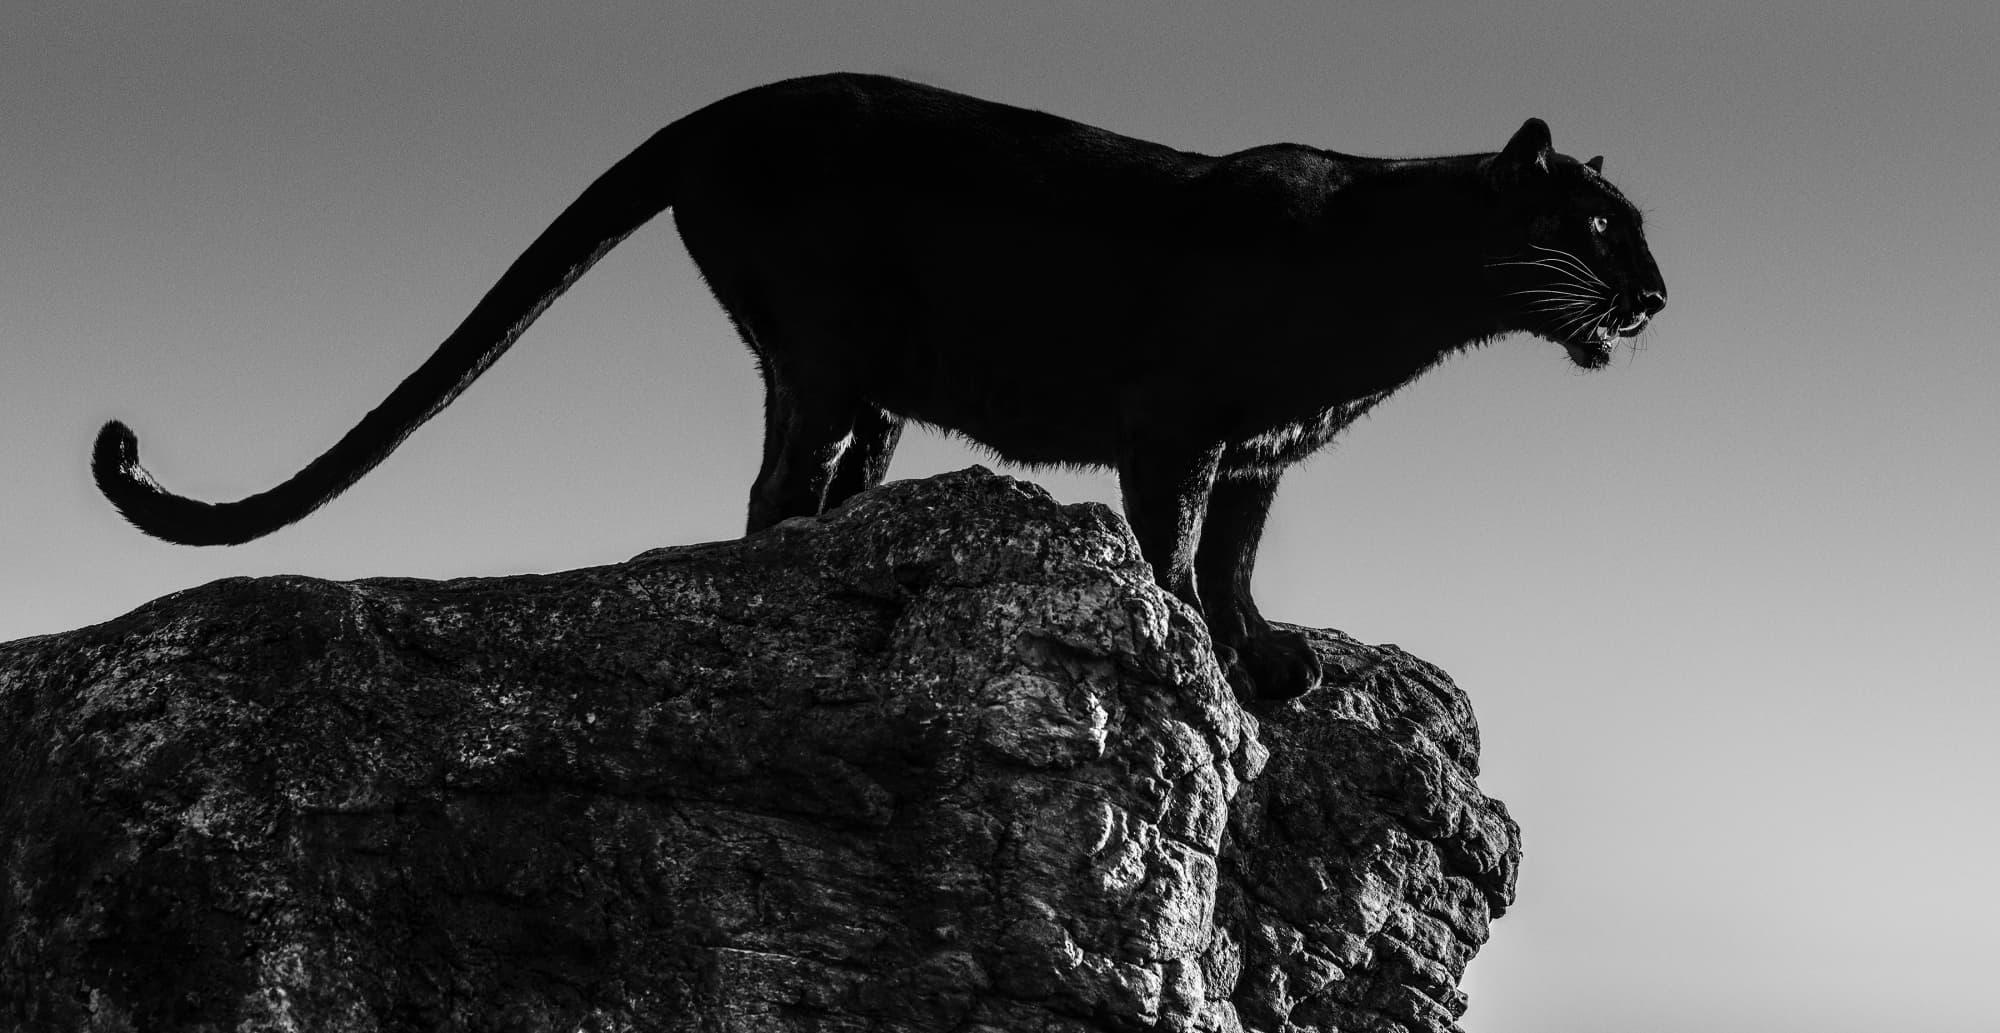 David Yarrow Black and White Photograph - Black Cat